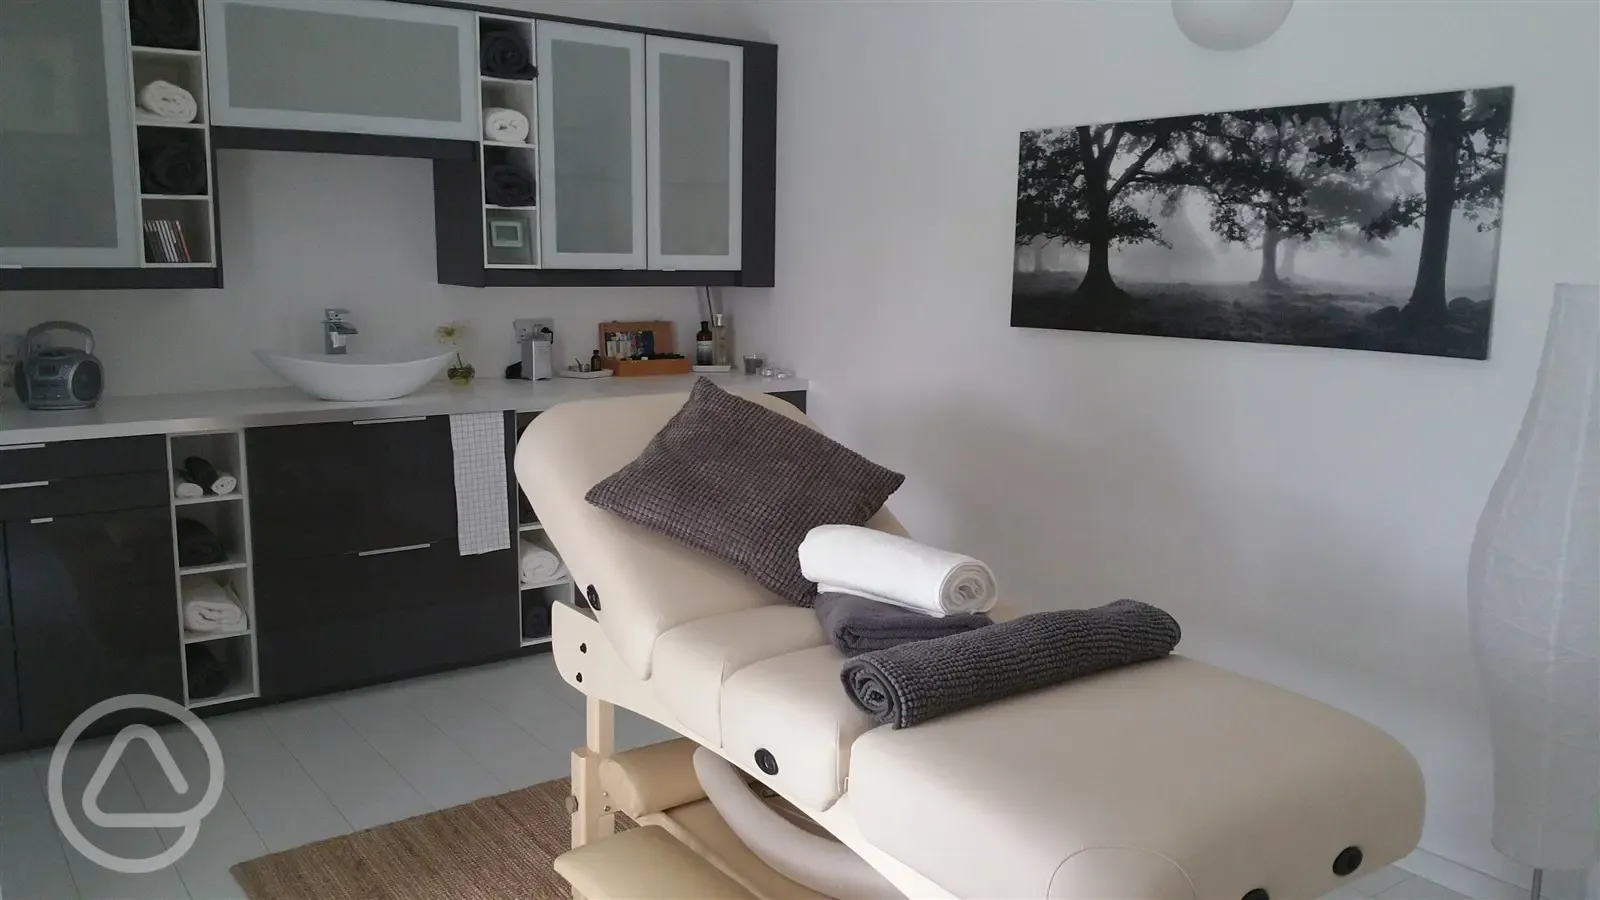 Hideaway Spa massage, treatment room